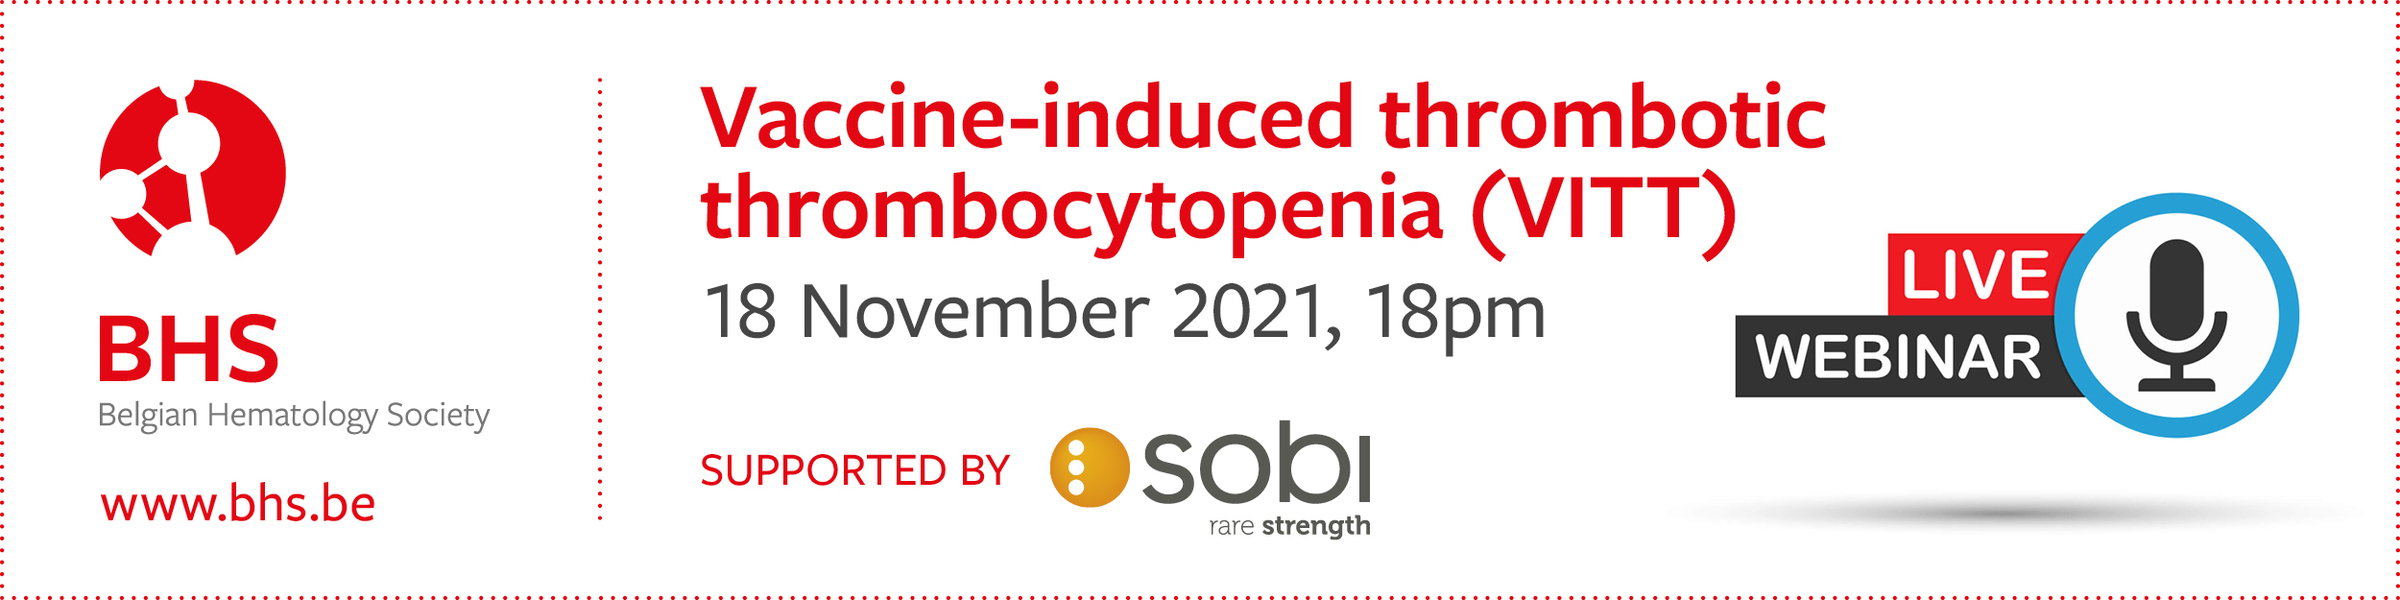 Vaccine-induced thrombotic thrombocytopenia (VITT); BHS - Sobi Webinar